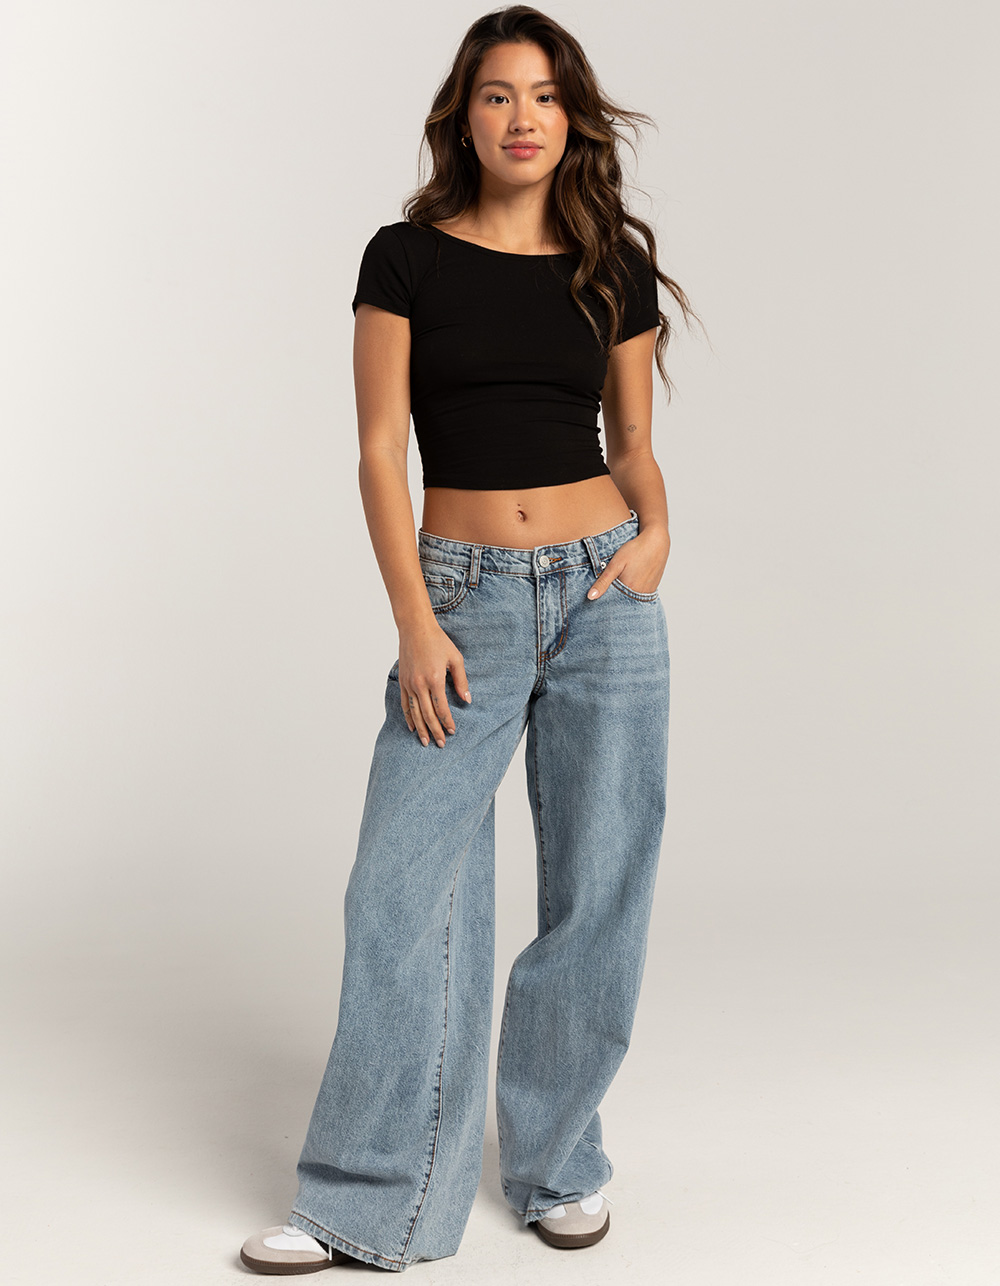 4-13T Jeans For Girls Elegant Bow Cute Denim Pants Sweet Bowknot